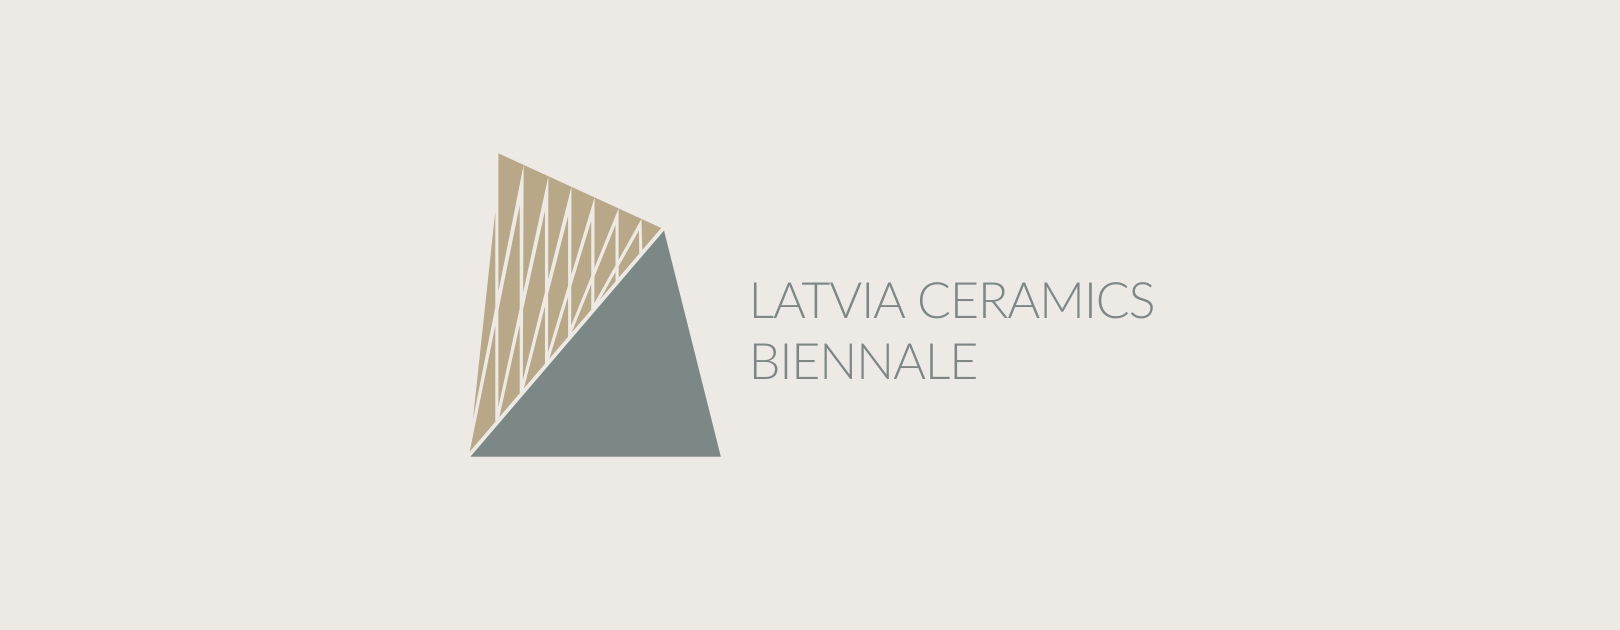 4th Latvia ceramics BIENNALE